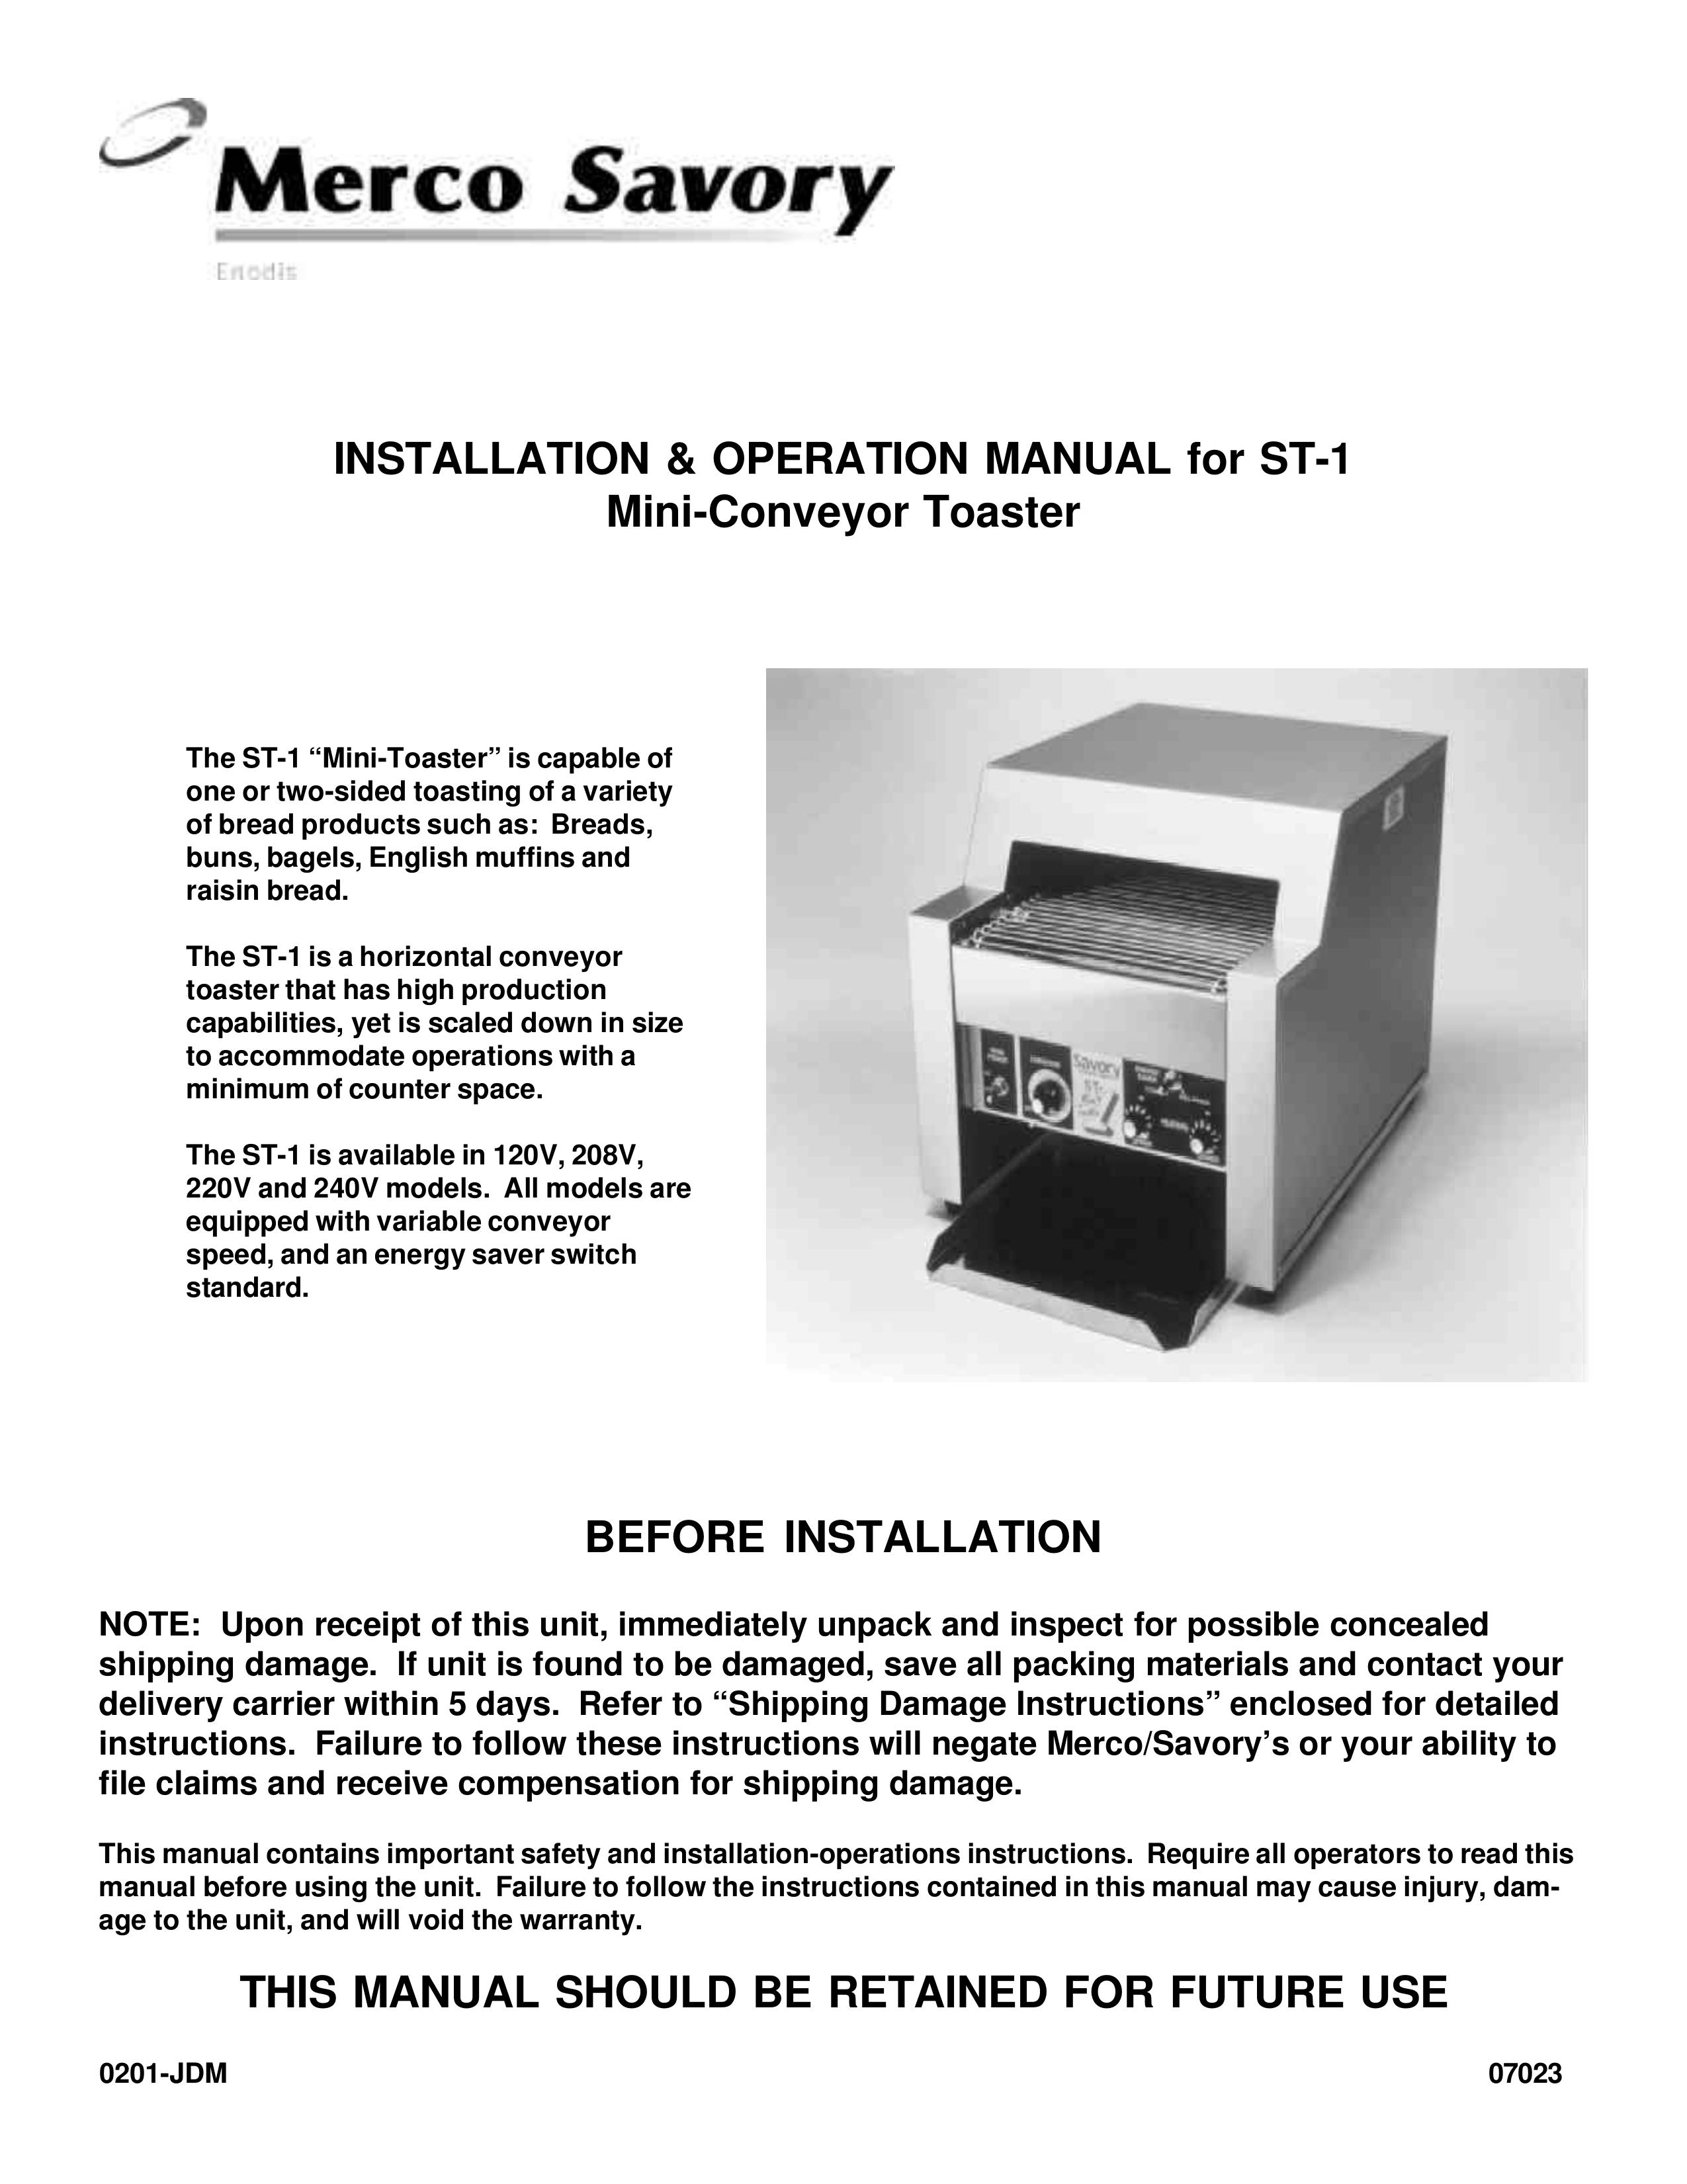 Merco Savory ST-1 Toaster User Manual